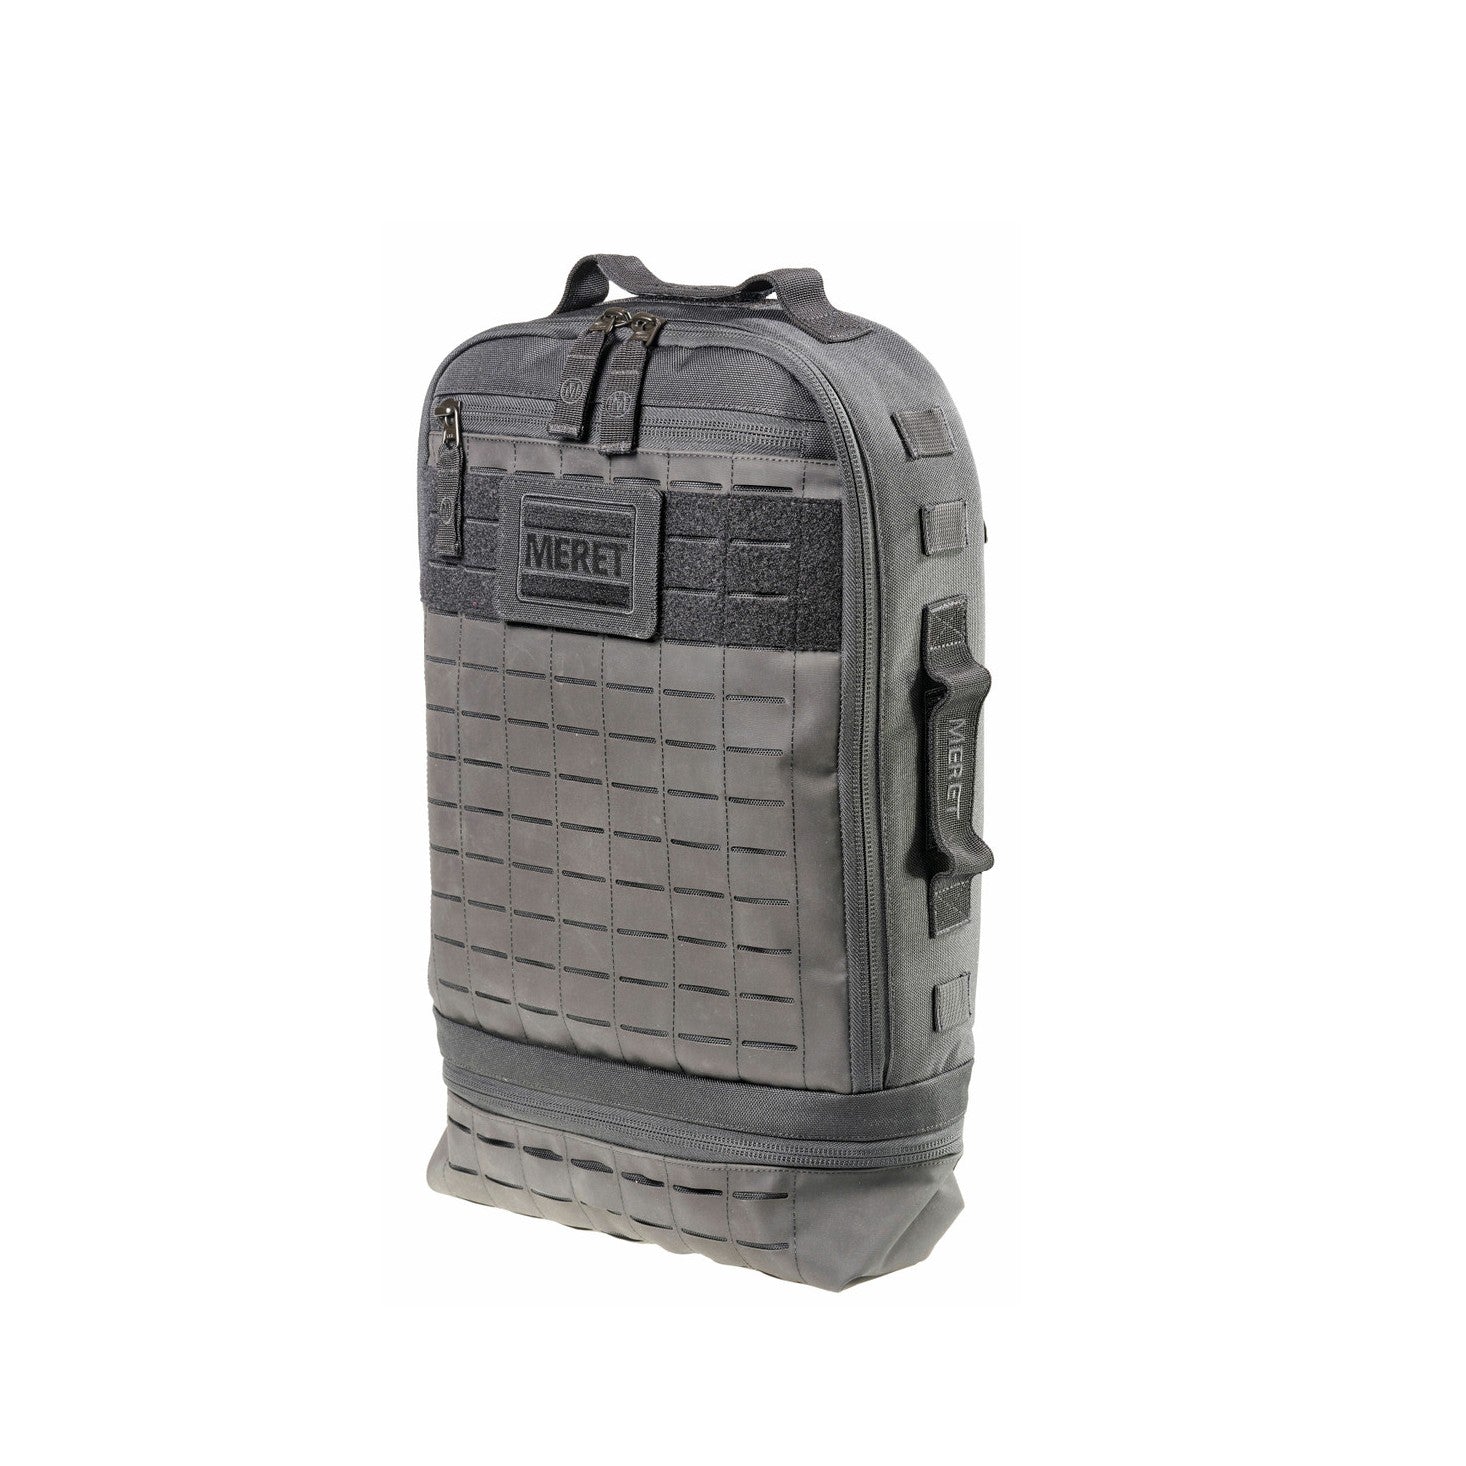 Meret SAVIOR7 PRO Combat Trauma Backpack, - w/ Armor, Black